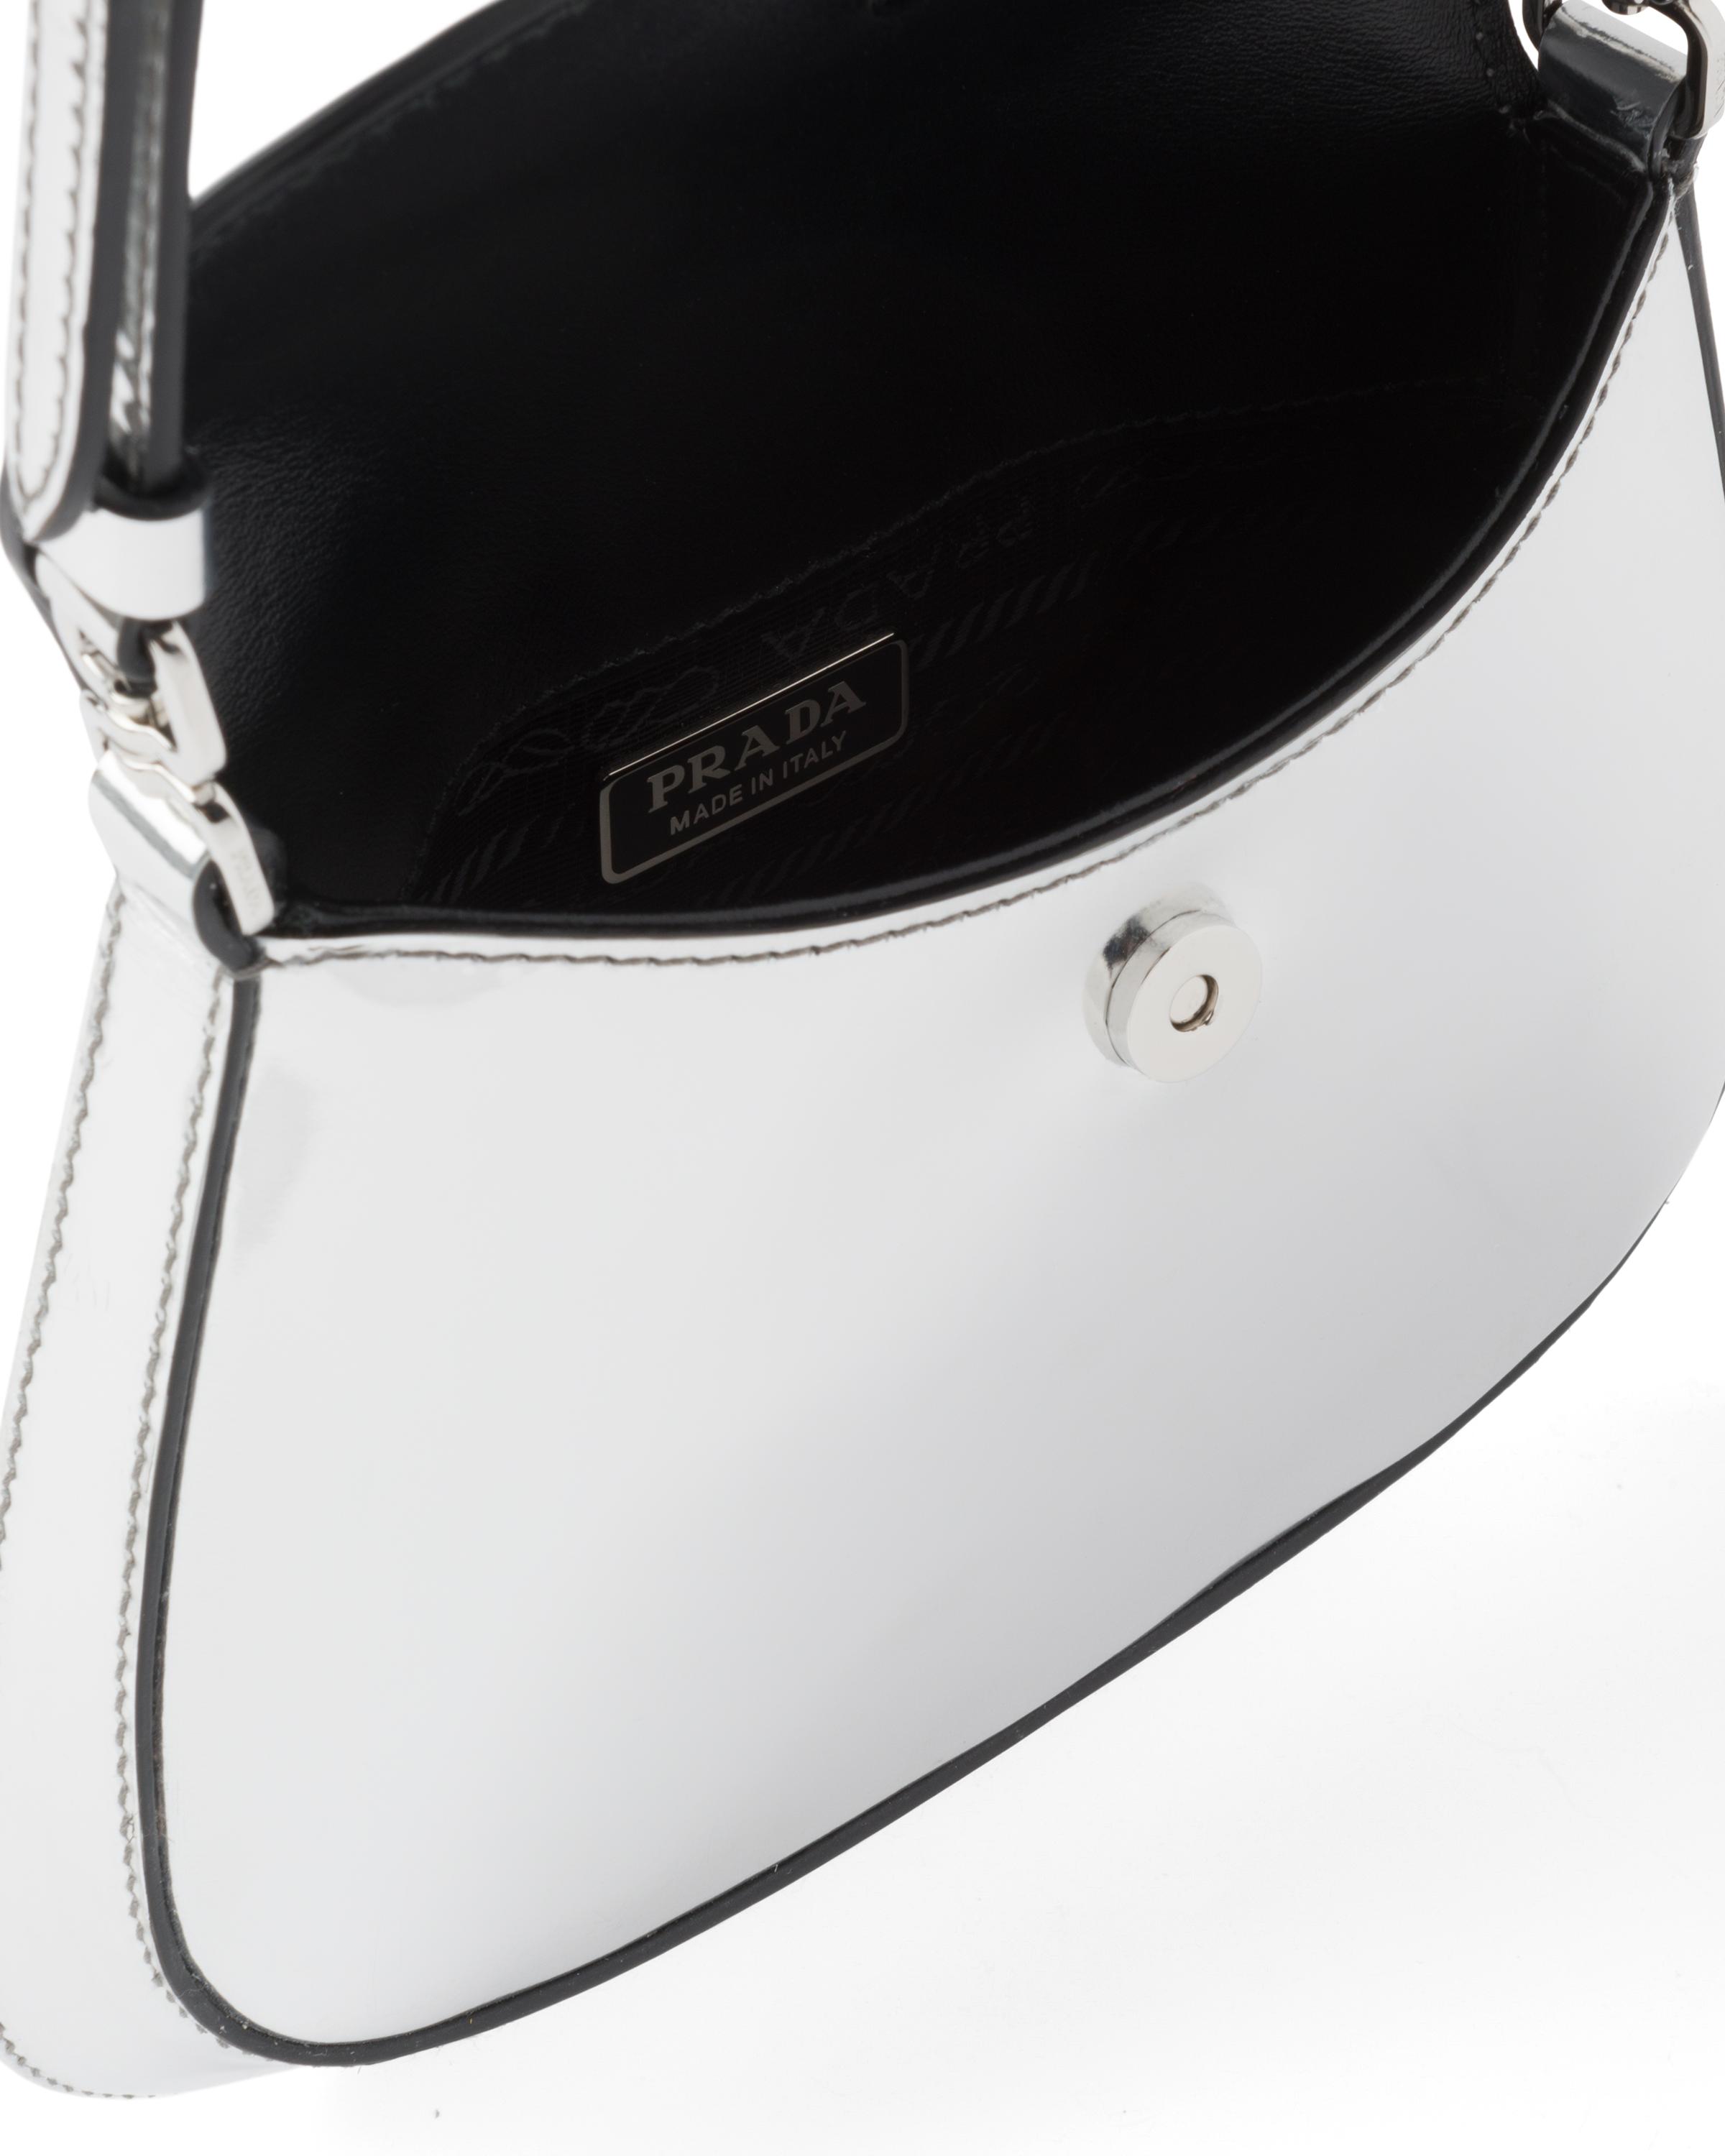 Silver Prada Cleo Brushed Leather Mini Bag, PRADA